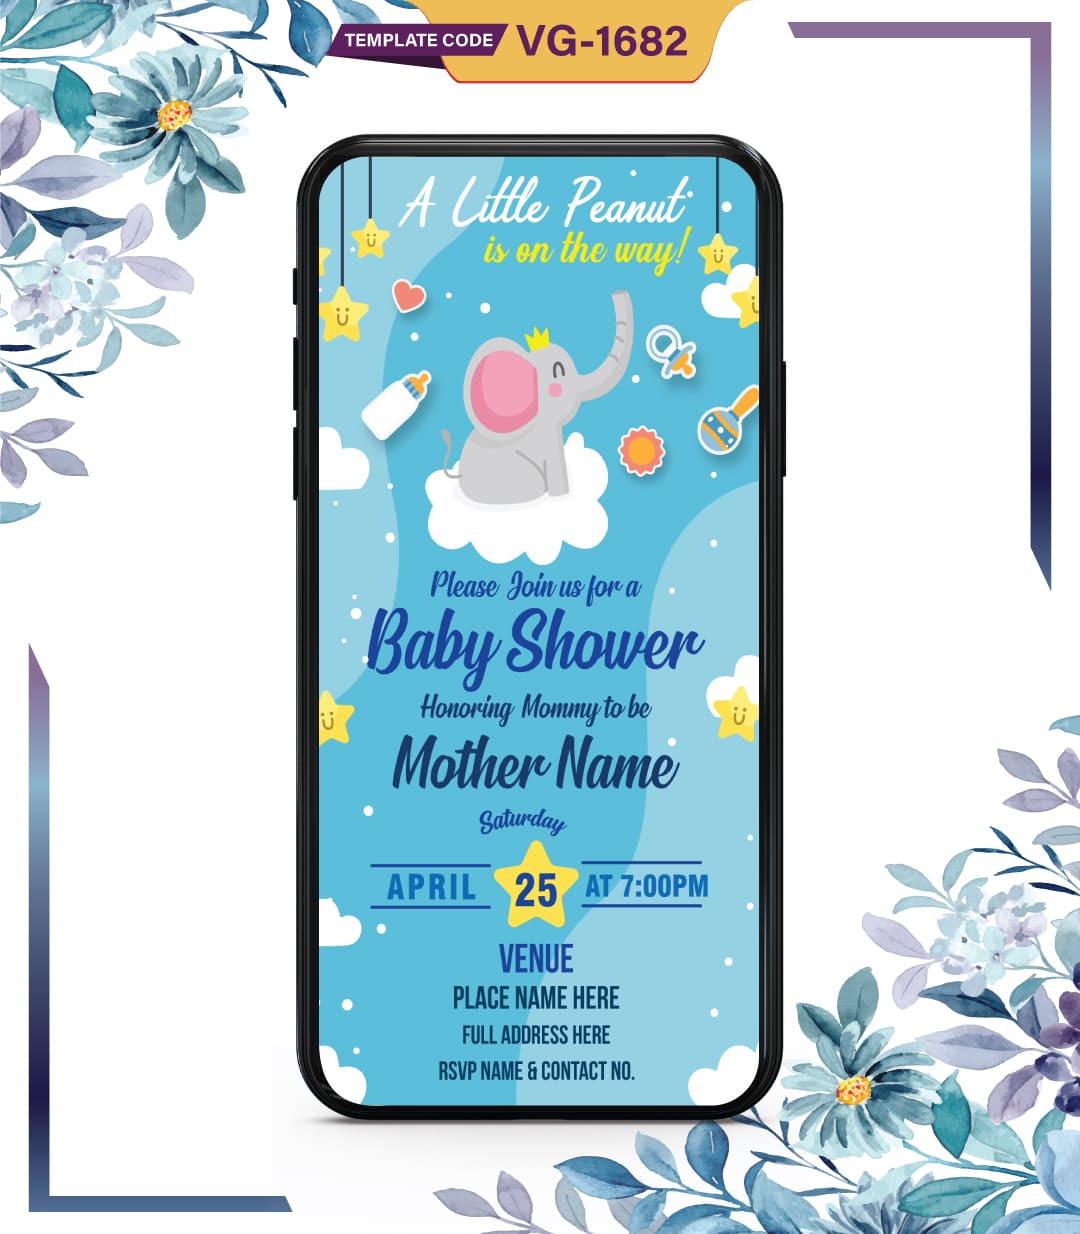 Little Peanut Baby Shower Invitation Card